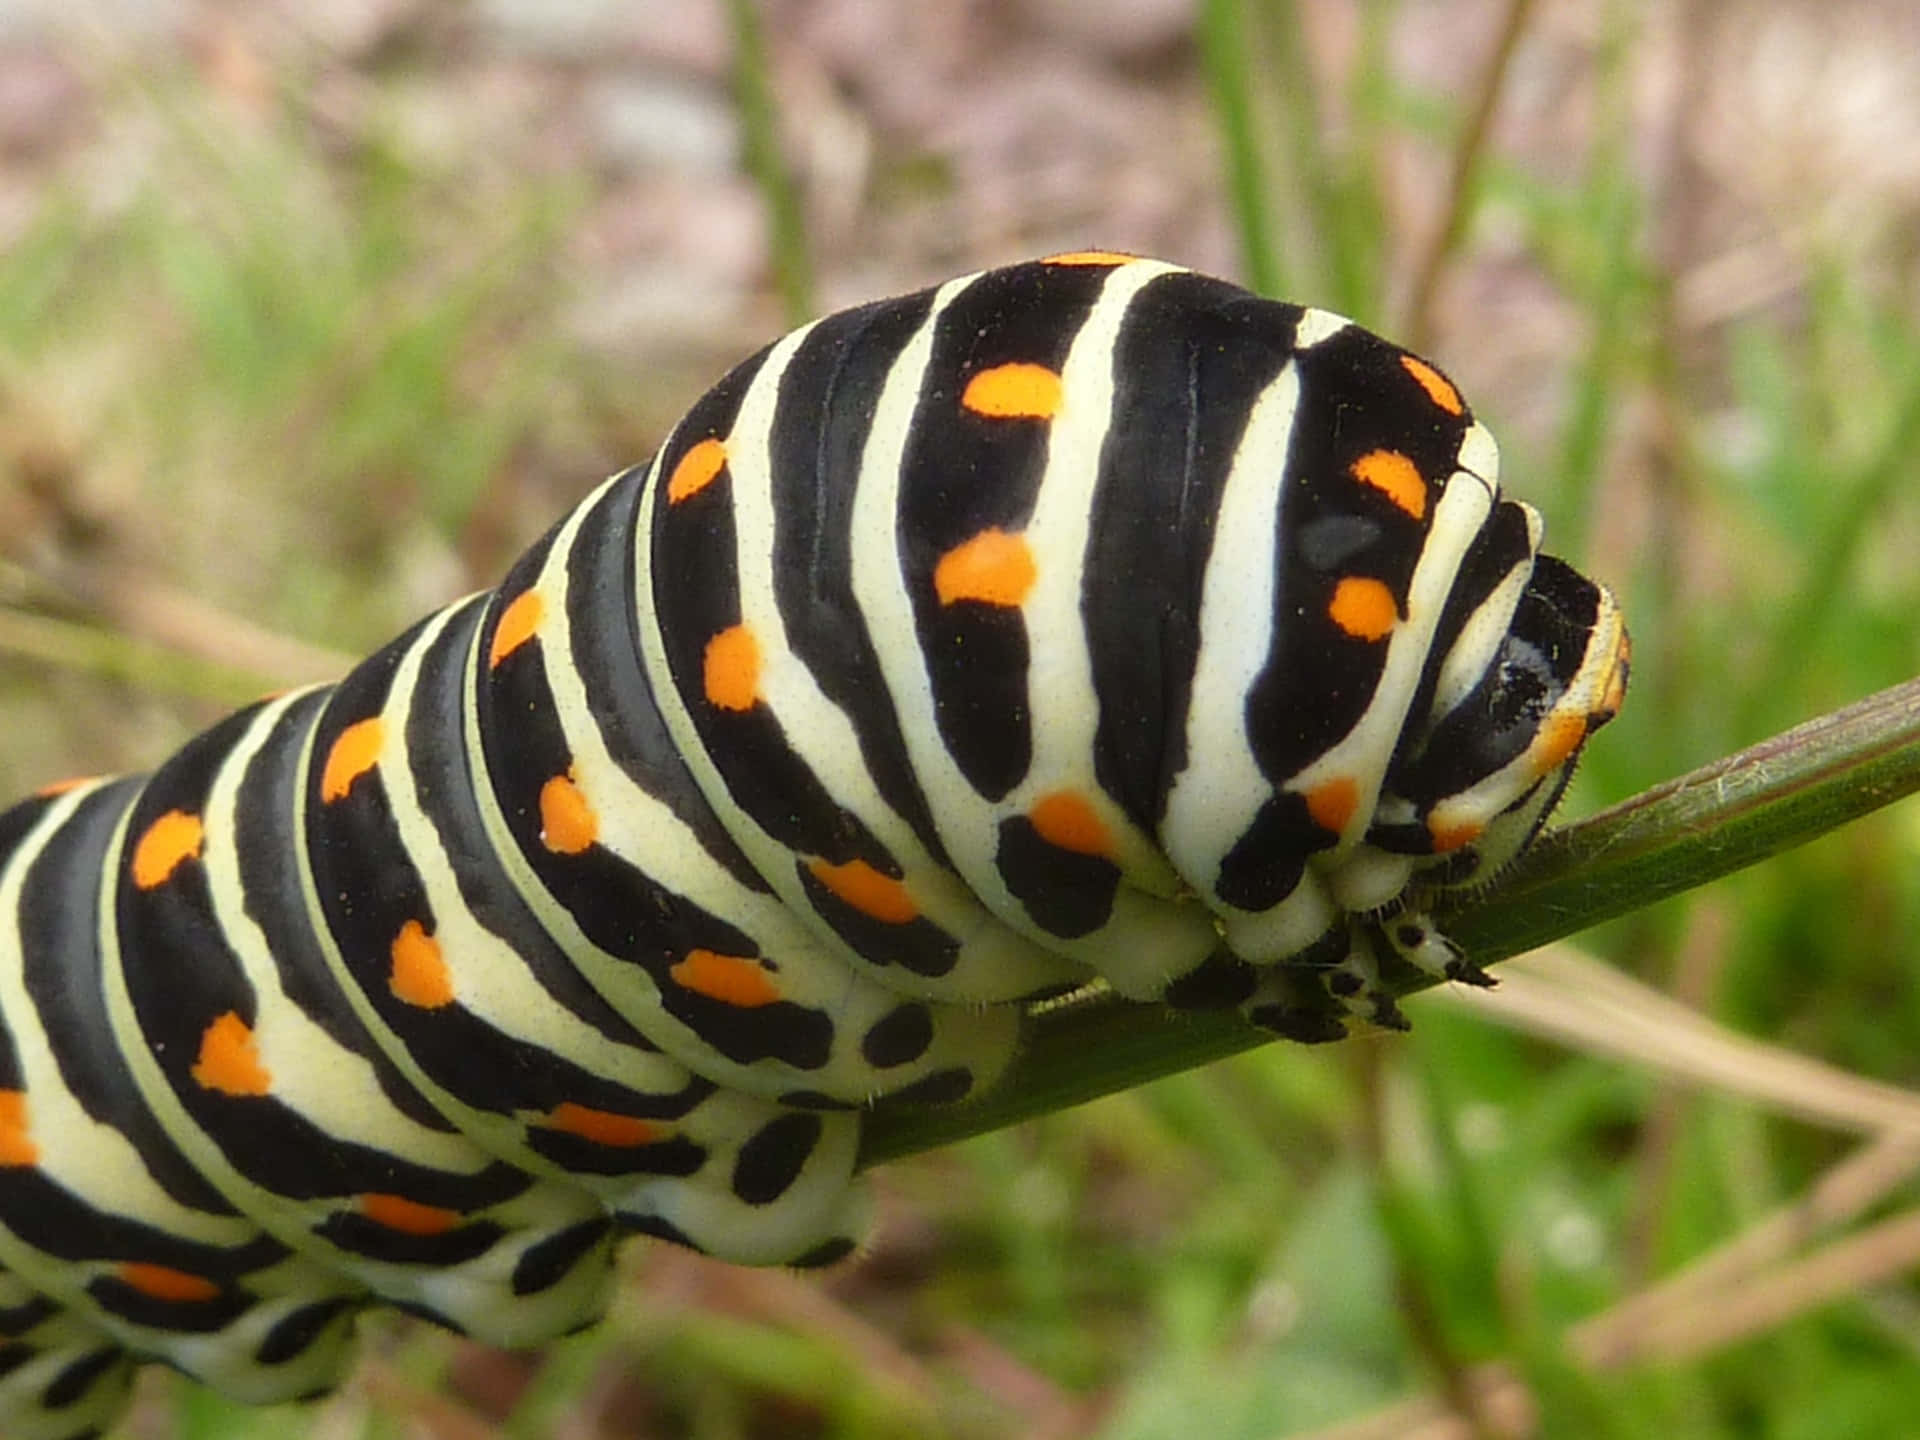 A Black And Orange Caterpillar On A Stem